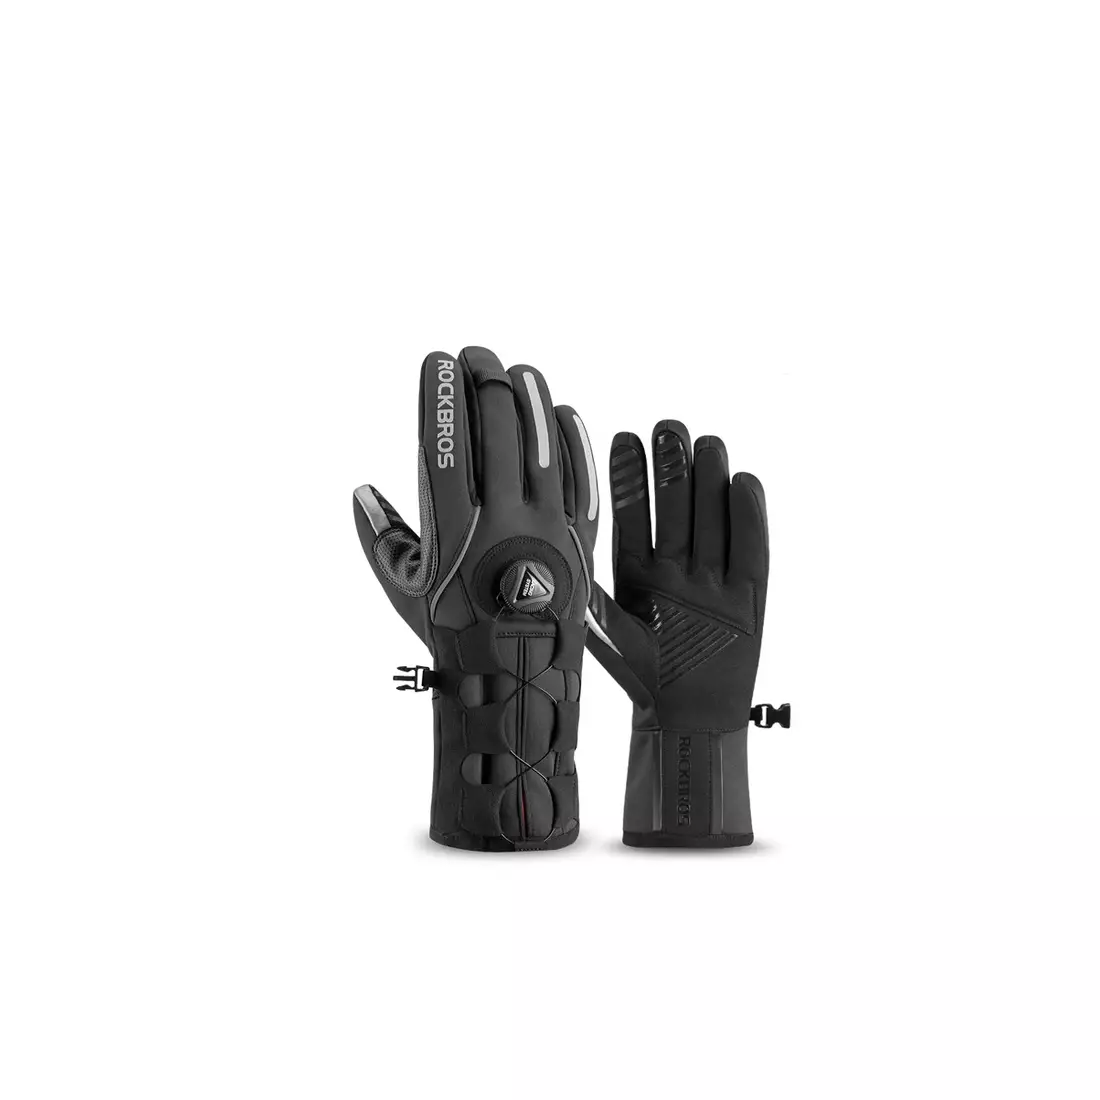 Rockbros zimné cyklistické rukavice softshell s úpravou, čierna S212BK